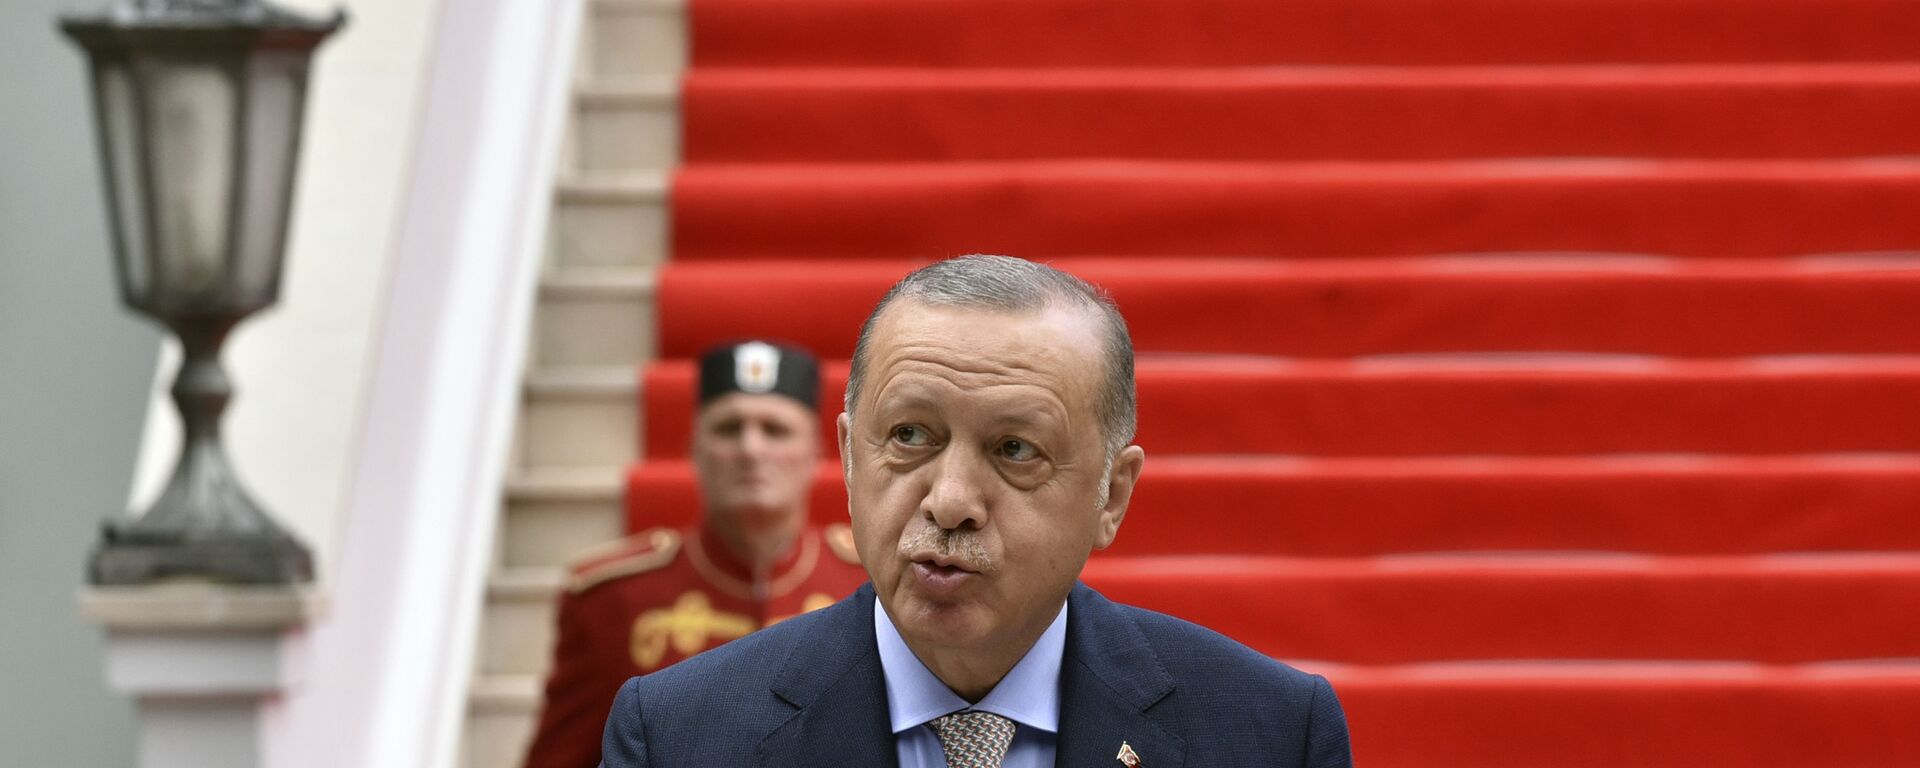 Президент Турции Реджеп Тайип Эрдоган, фото из архива - Sputnik Азербайджан, 1920, 29.11.2021